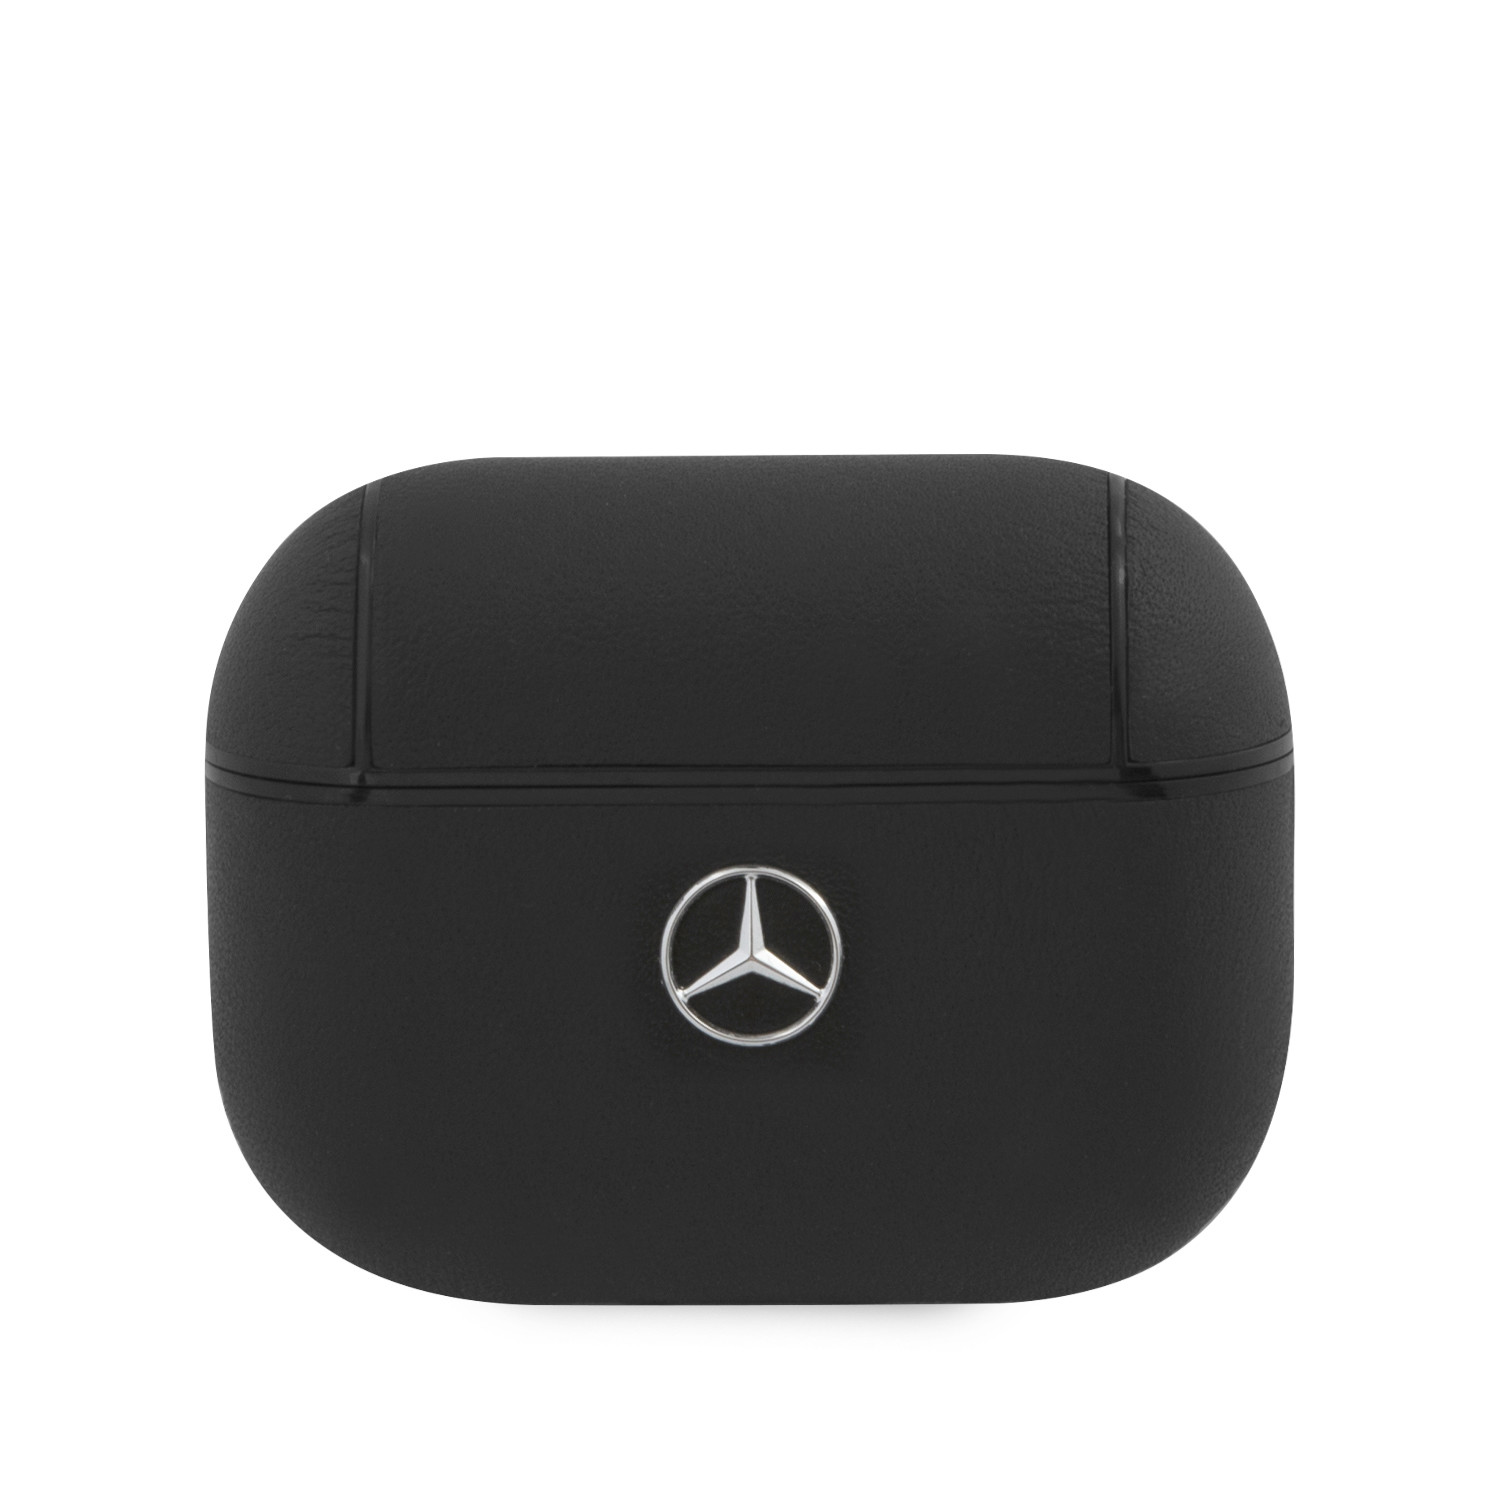 Husa Airpods Mercedes Leather pentru Airpods Pro Black thumb